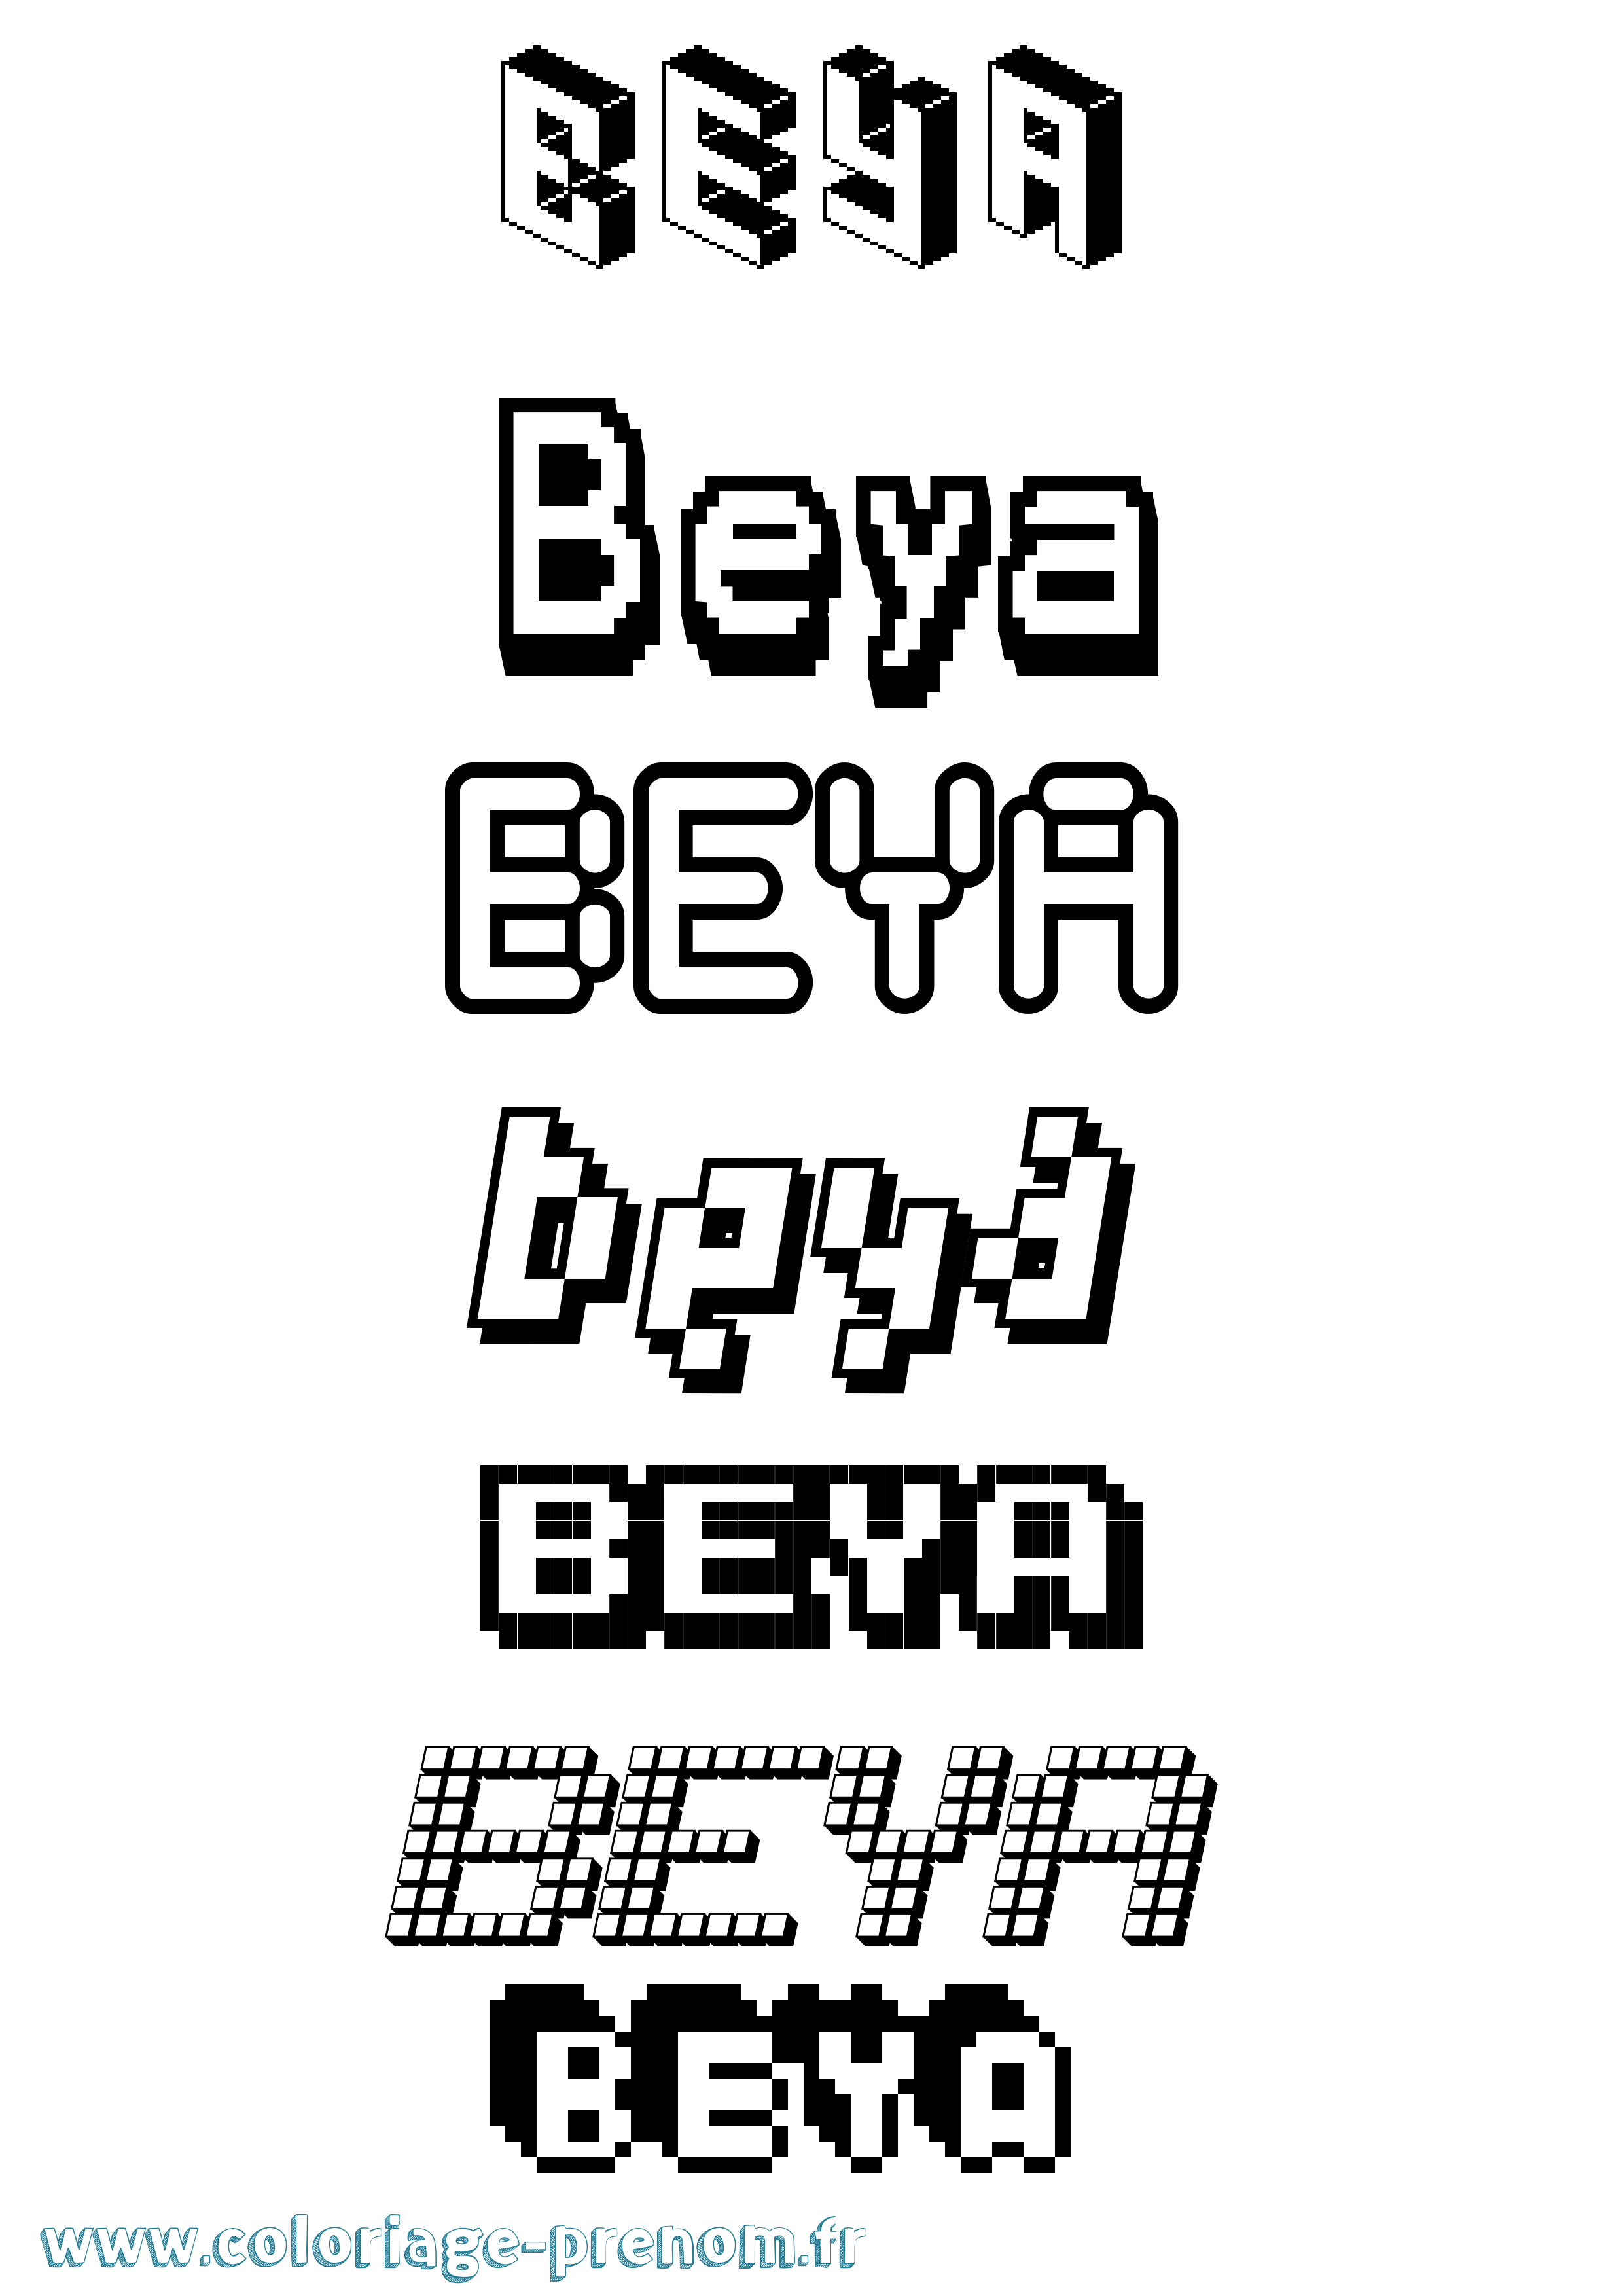 Coloriage prénom Beya Pixel